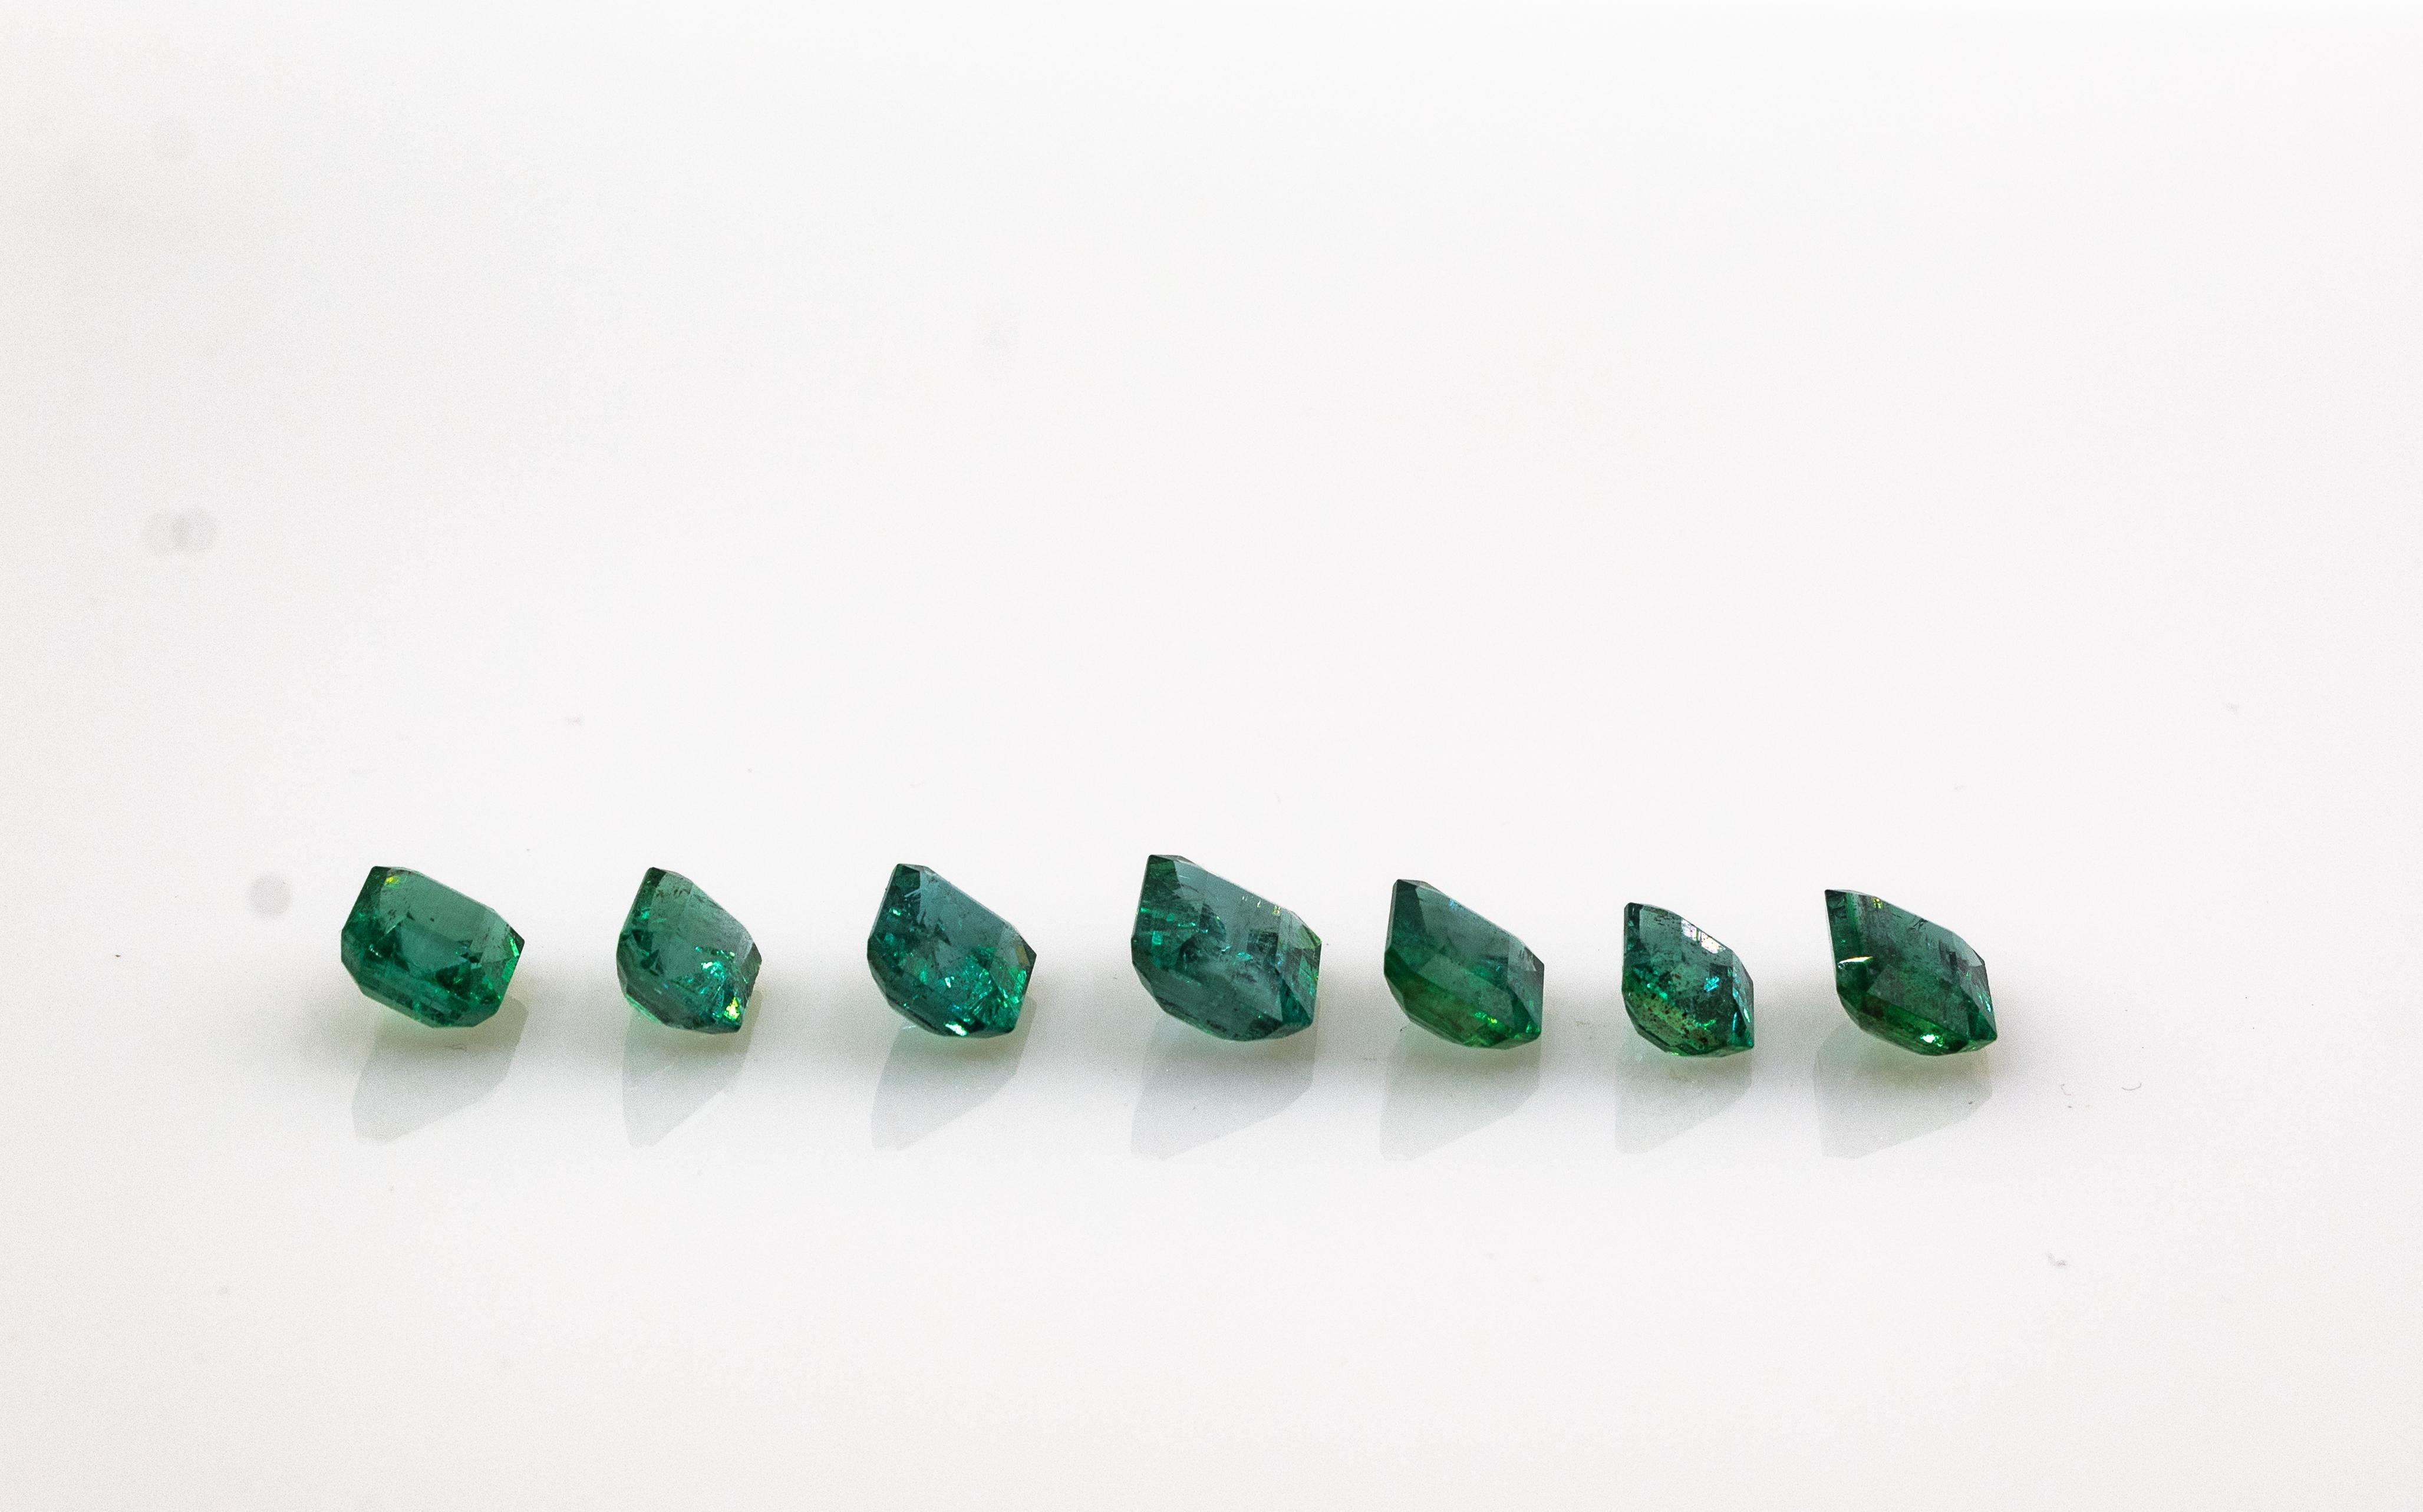 Certifiable Zambia Octagon Cut 4.18 Carat Emerald Loose Gemstone 7